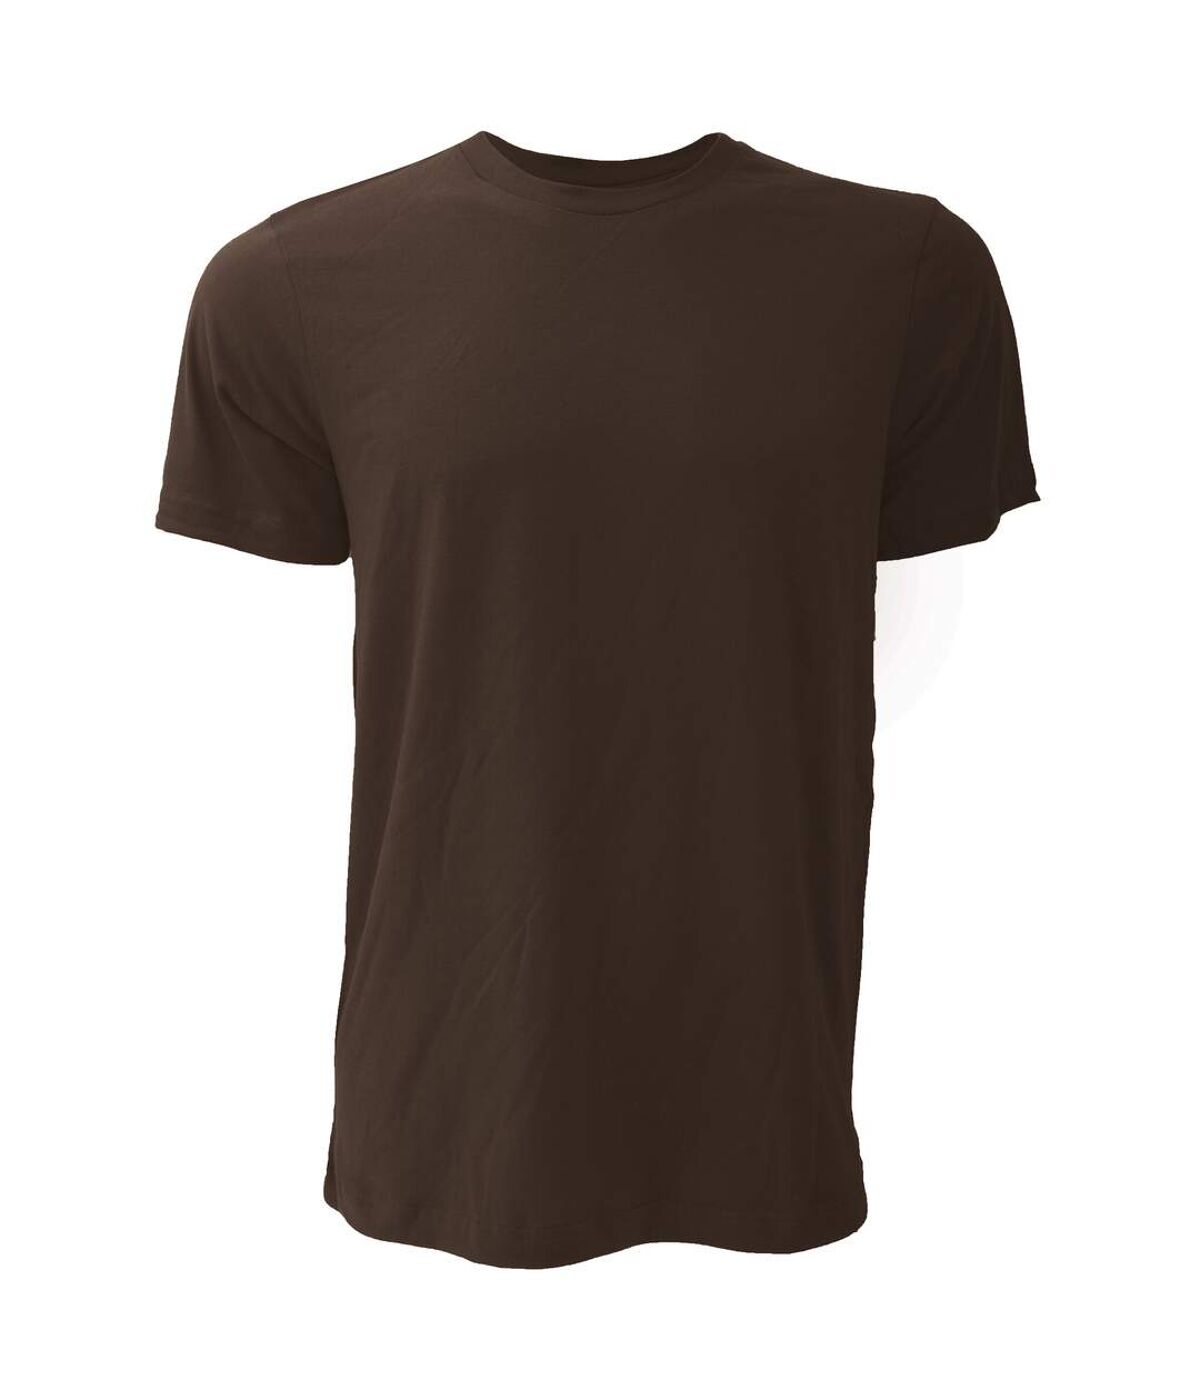 Canvas Unisex Jersey Crew Neck Short Sleeve T-Shirt (Brown) - UTBC163